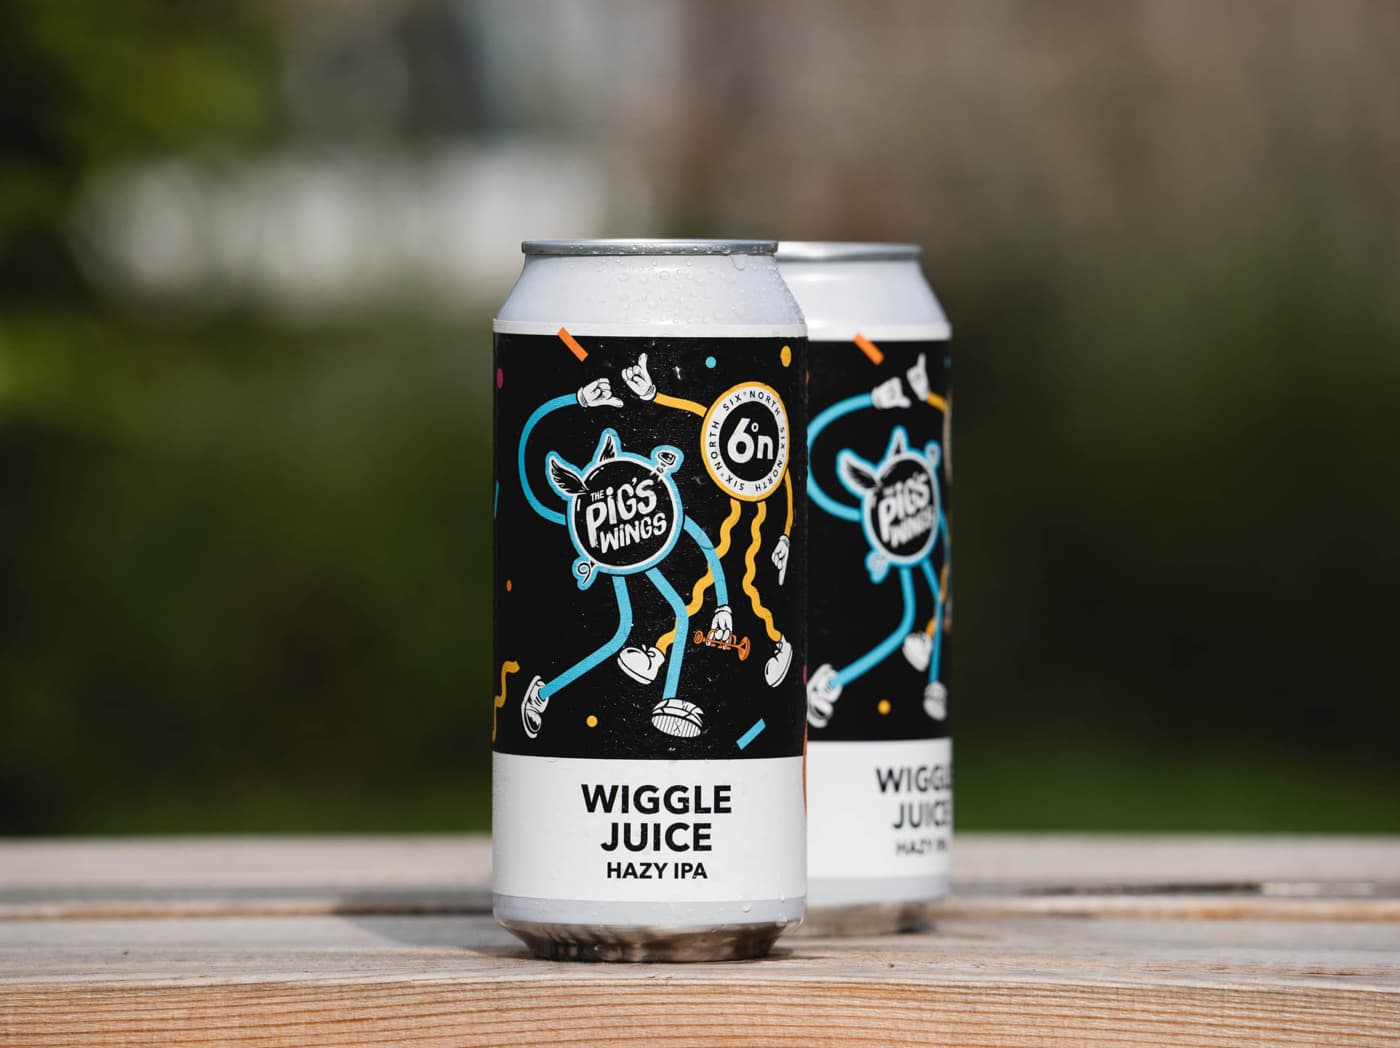 Wiggle Juice beer can